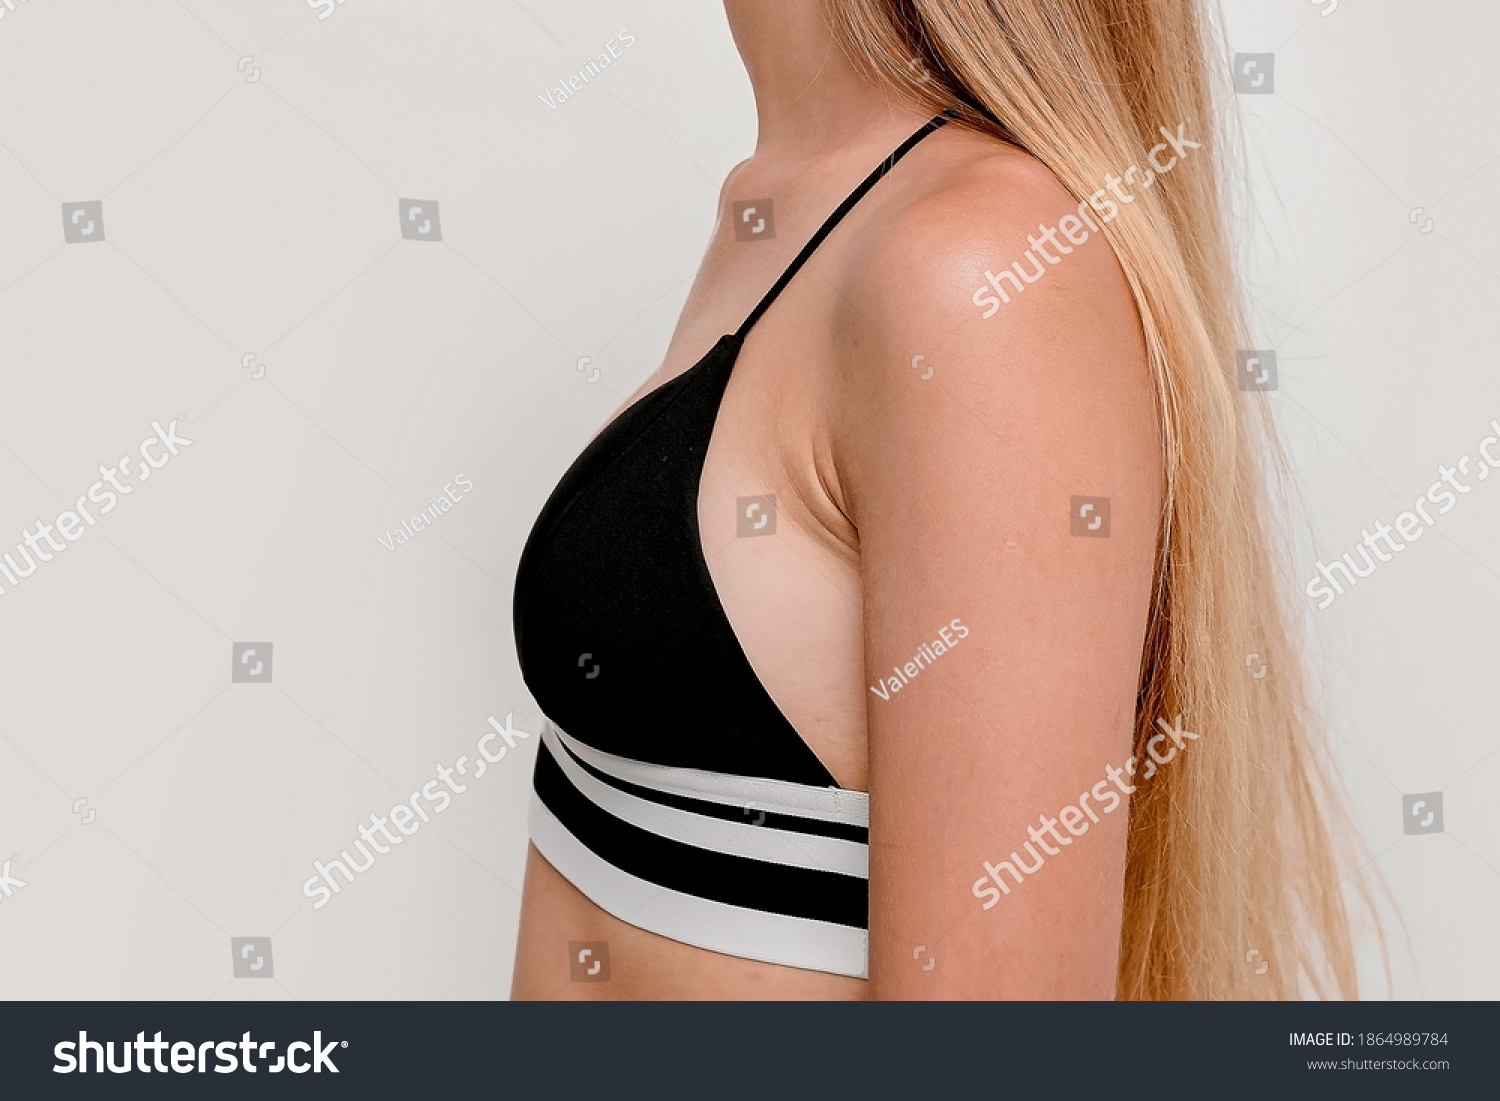 bonnie clide add slim girls small tits photo